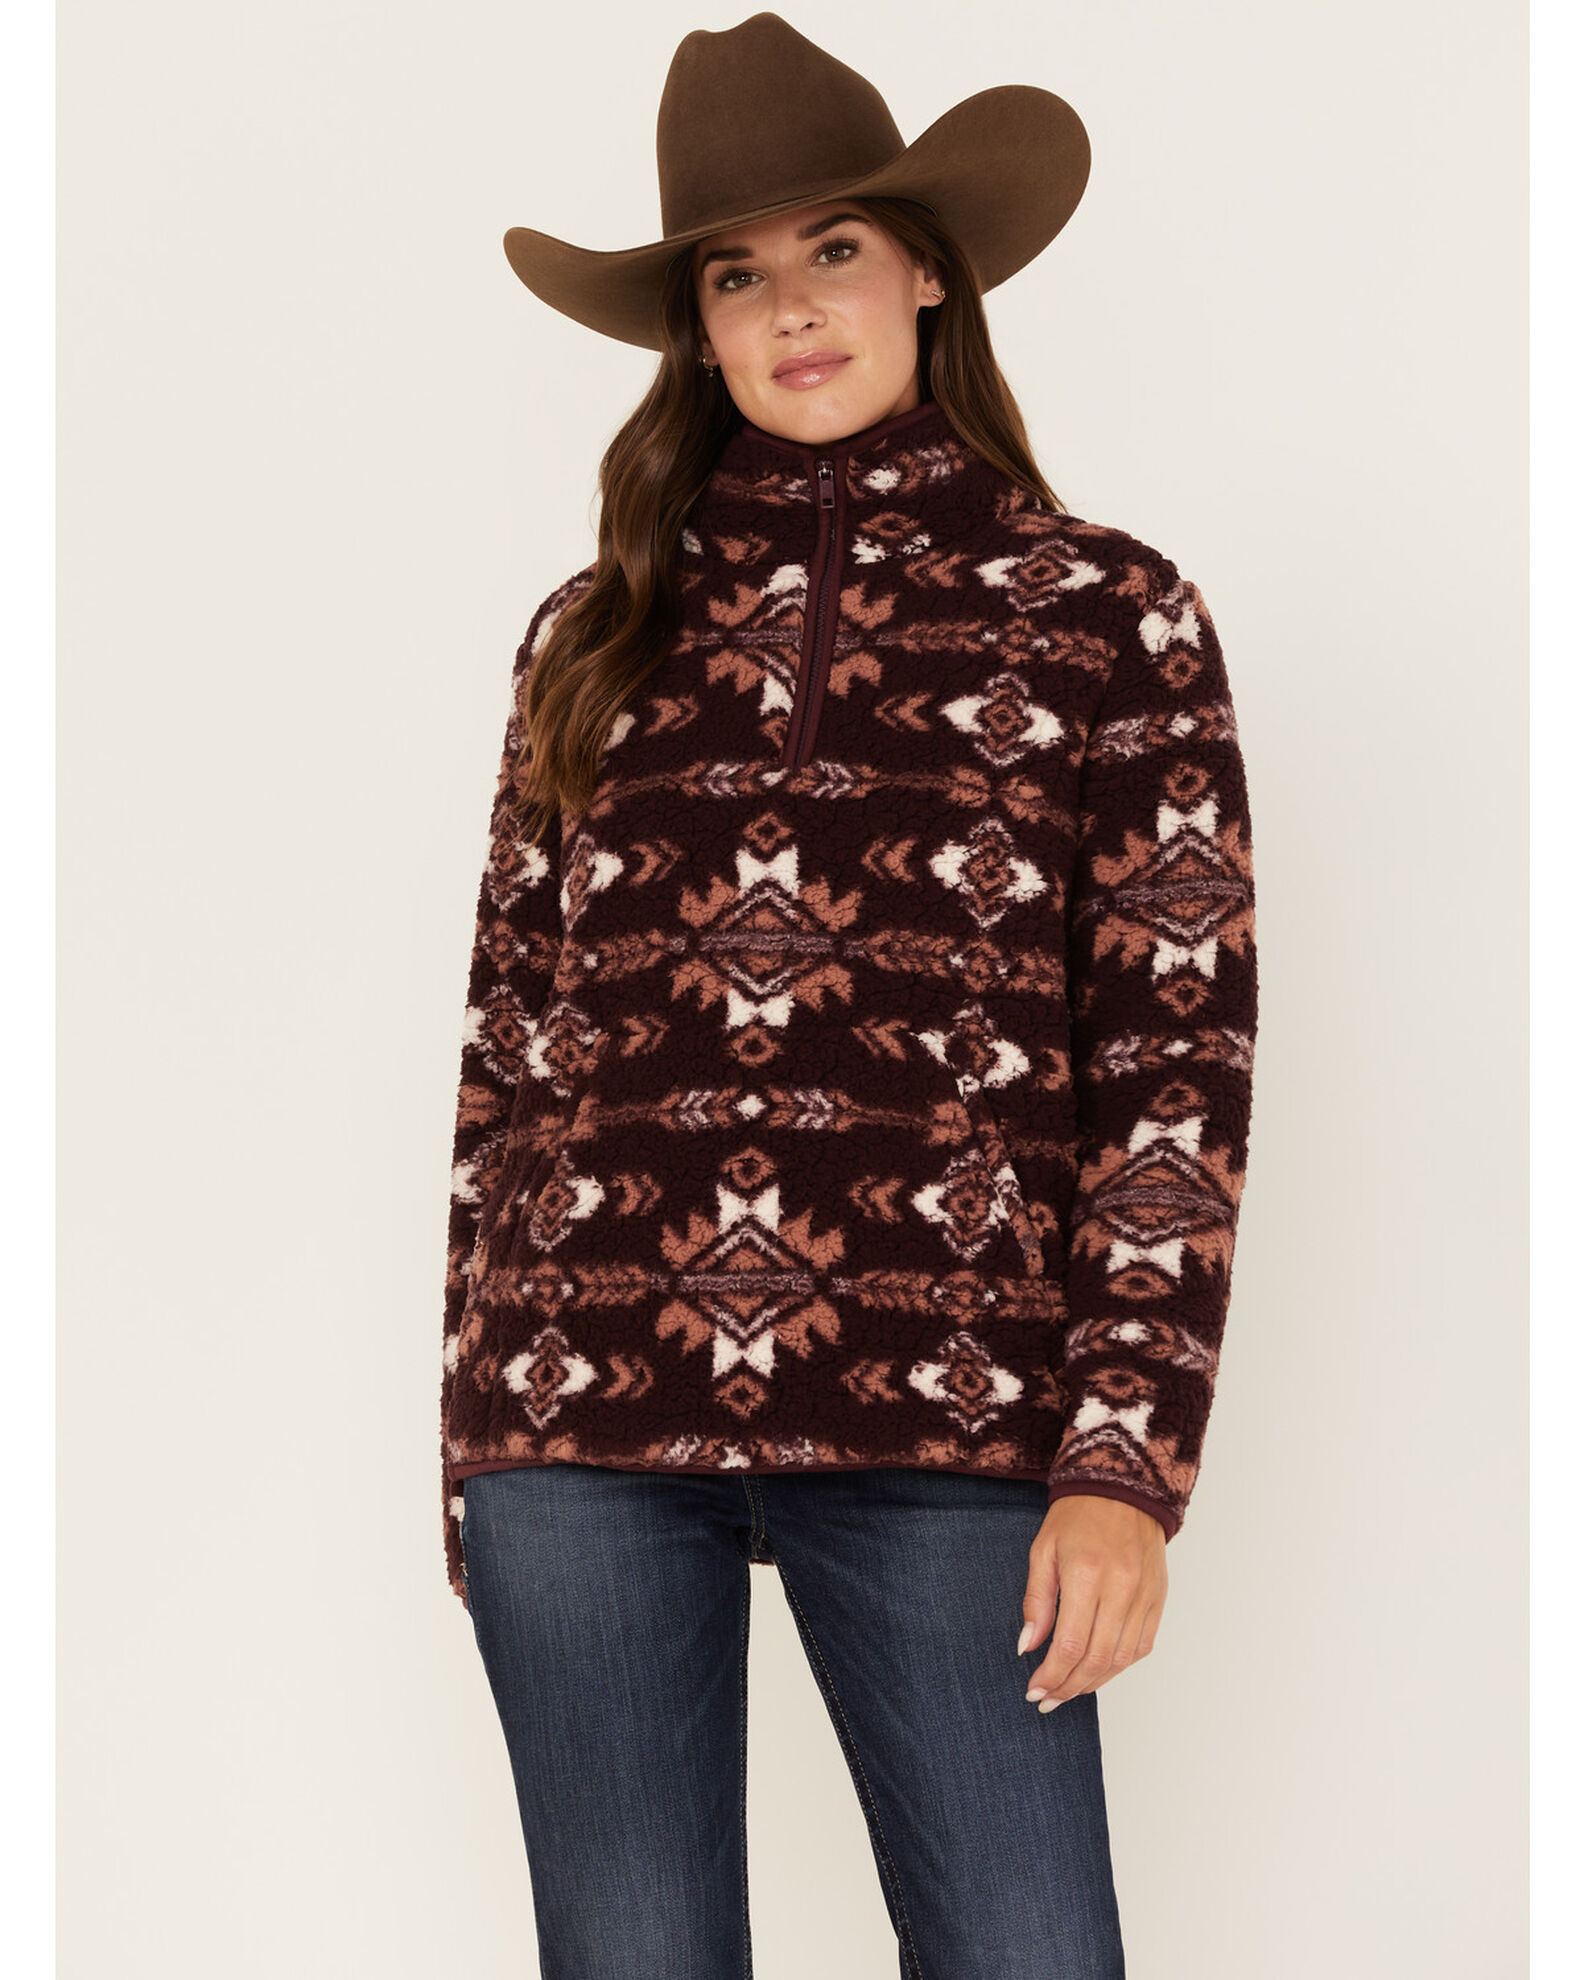 Wrangler Retro Women's Southwestern Print Fleece Quarter Zip Sweater -  Country Outfitter